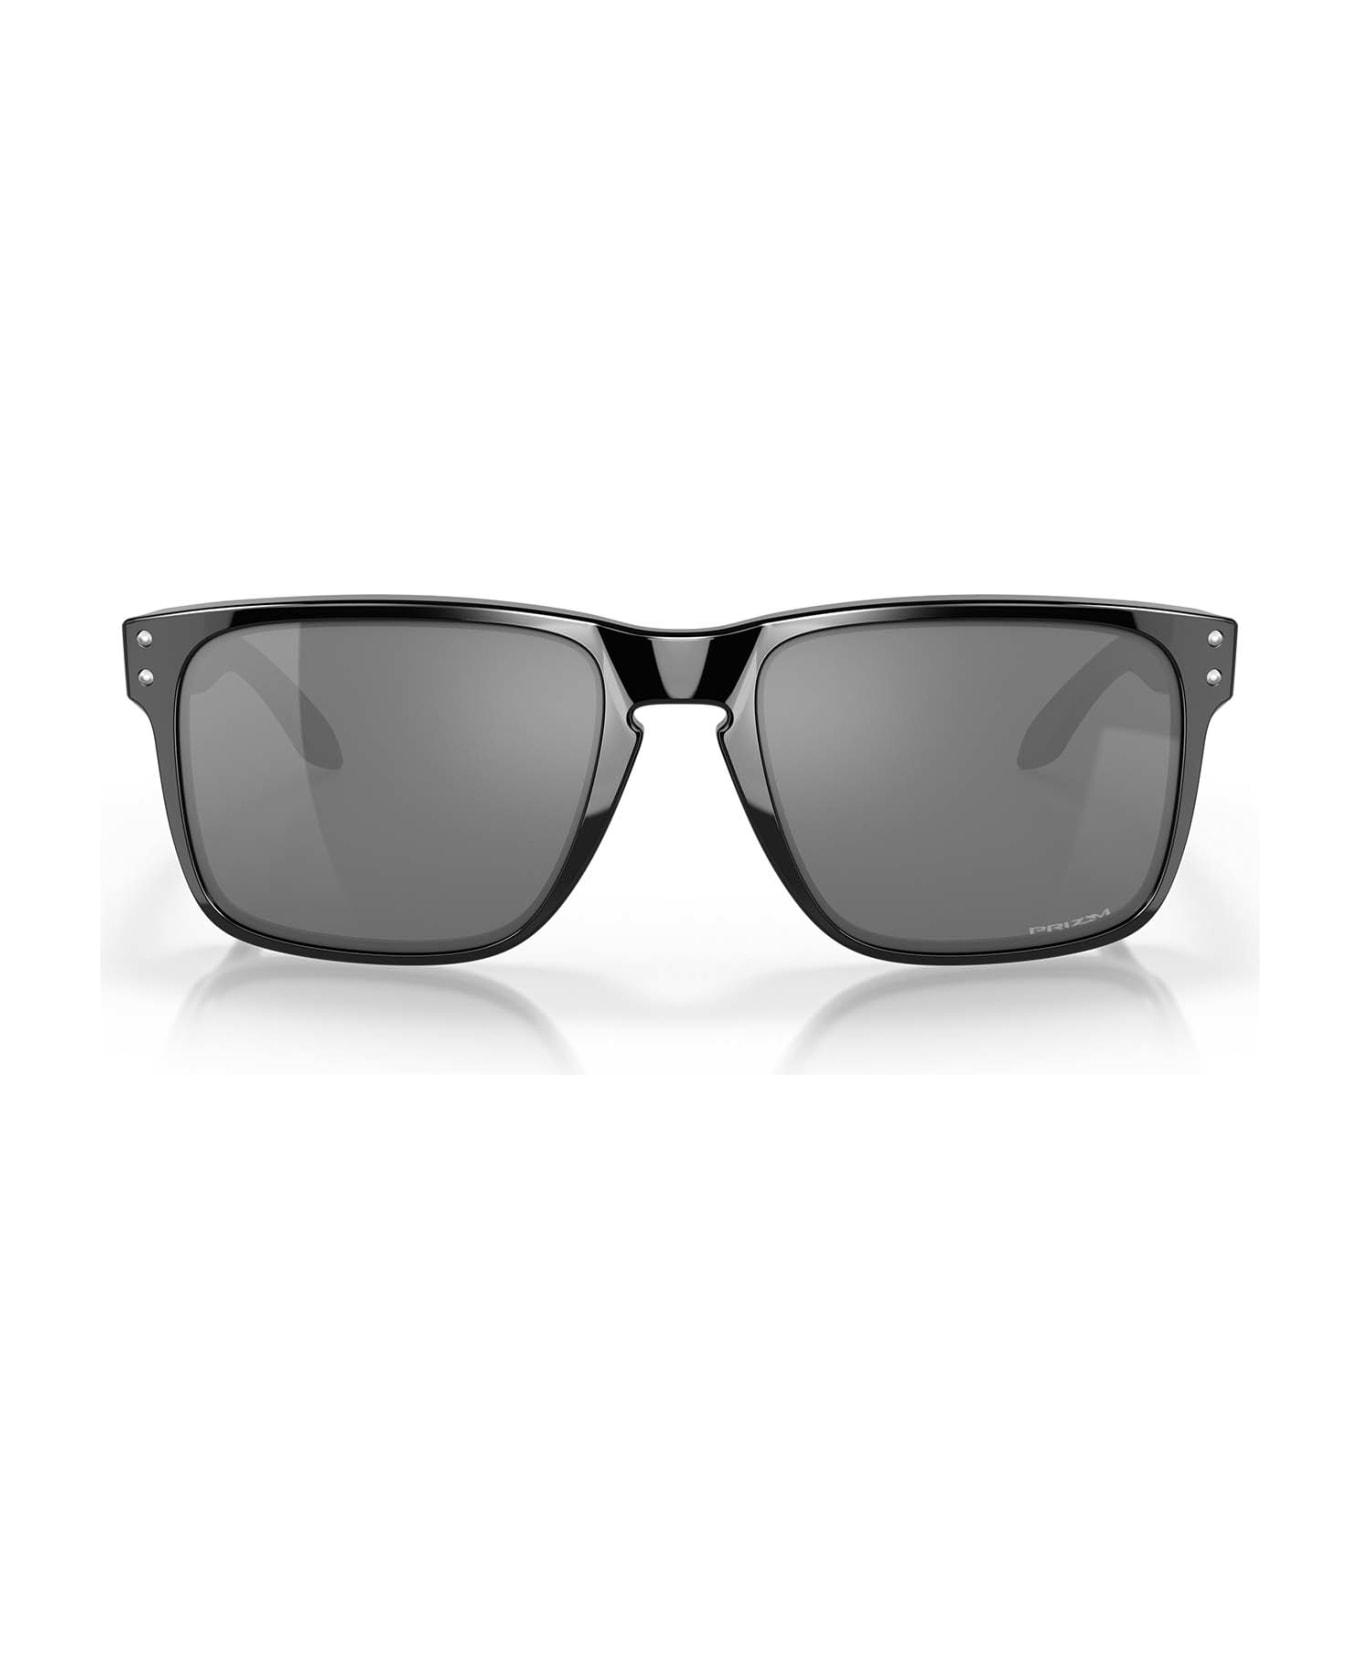 Oakley Oo9417 Polished Black Sunglasses - Polished Black サングラス